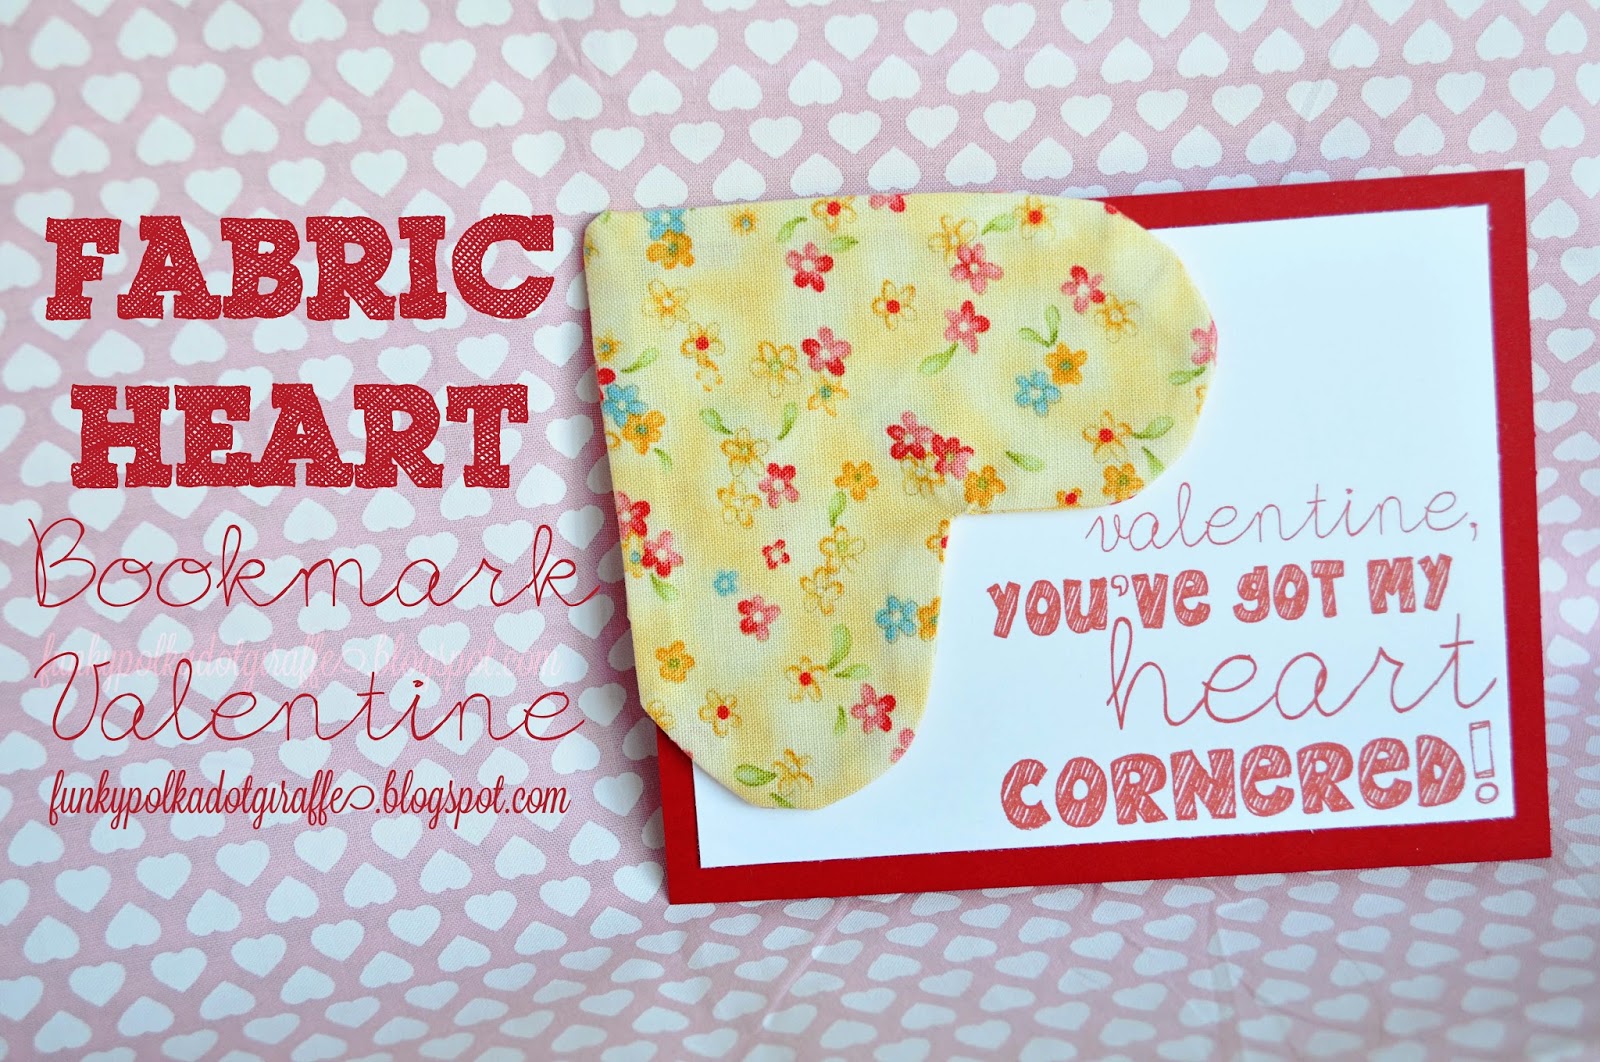 fabric heart bookmark